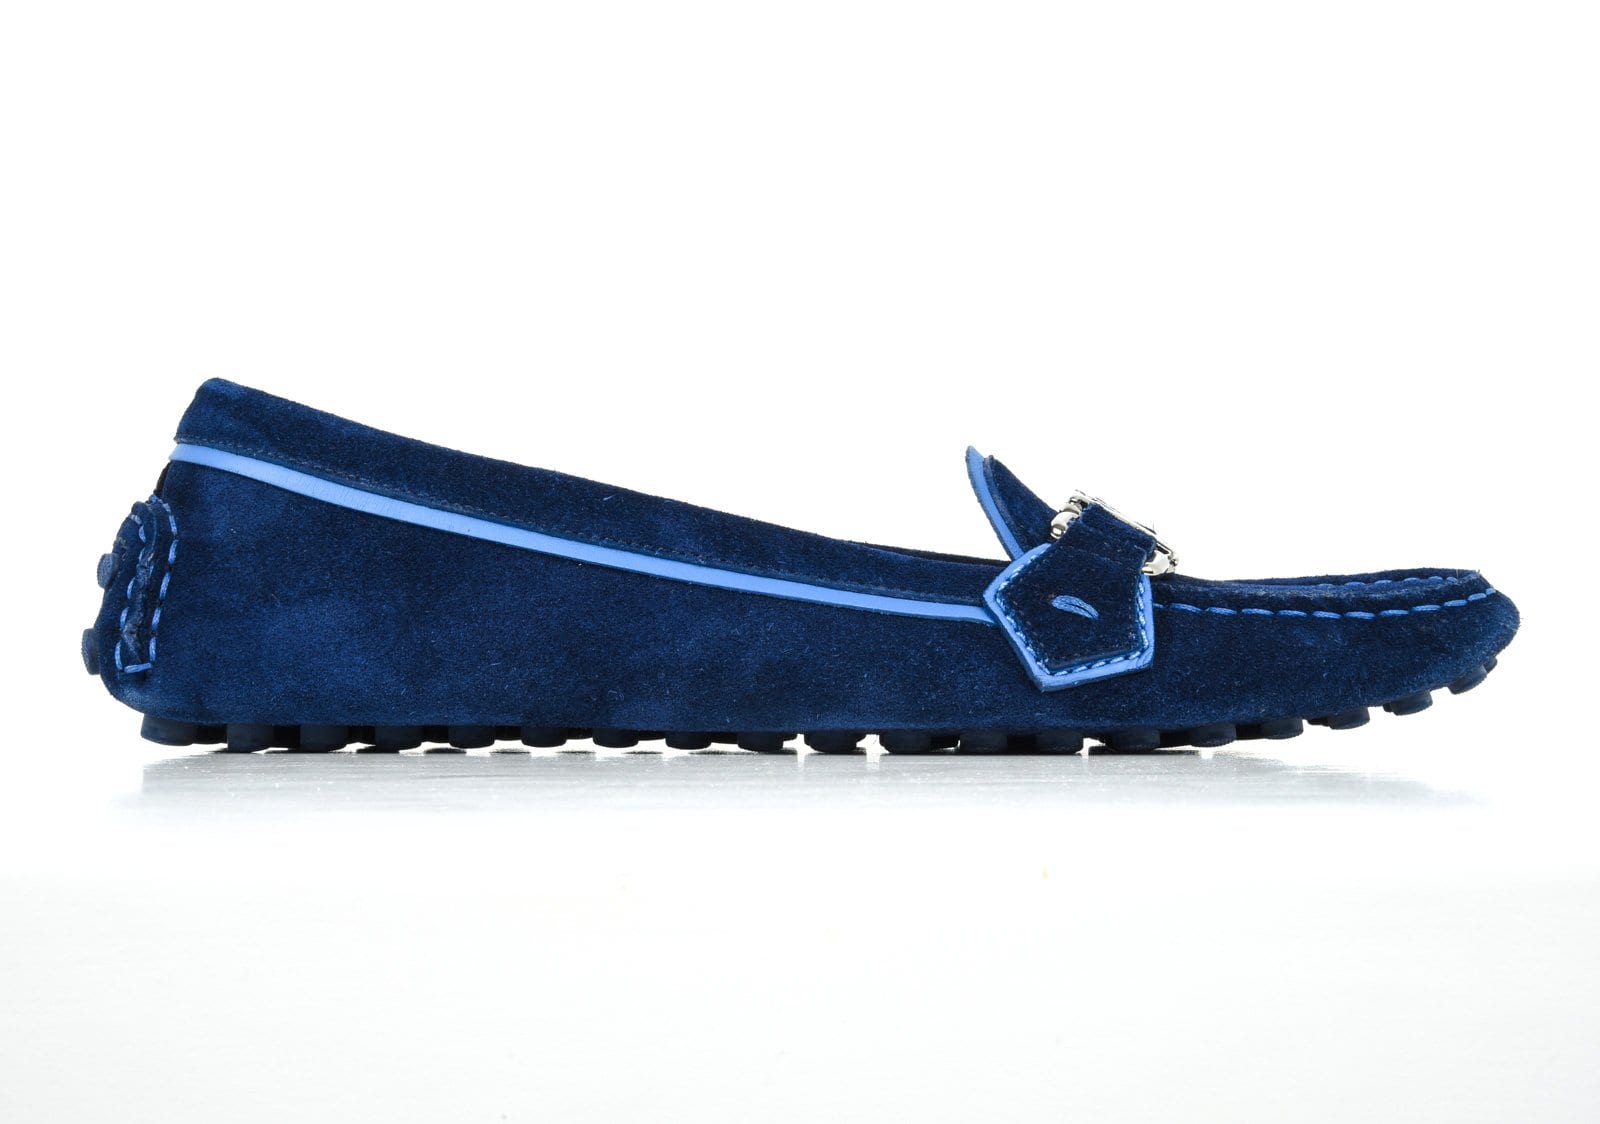 Men's Louis Vuitton Loafers Monte Carlo Shoes Sz (LV 7 USA 8 ) Great  Condition